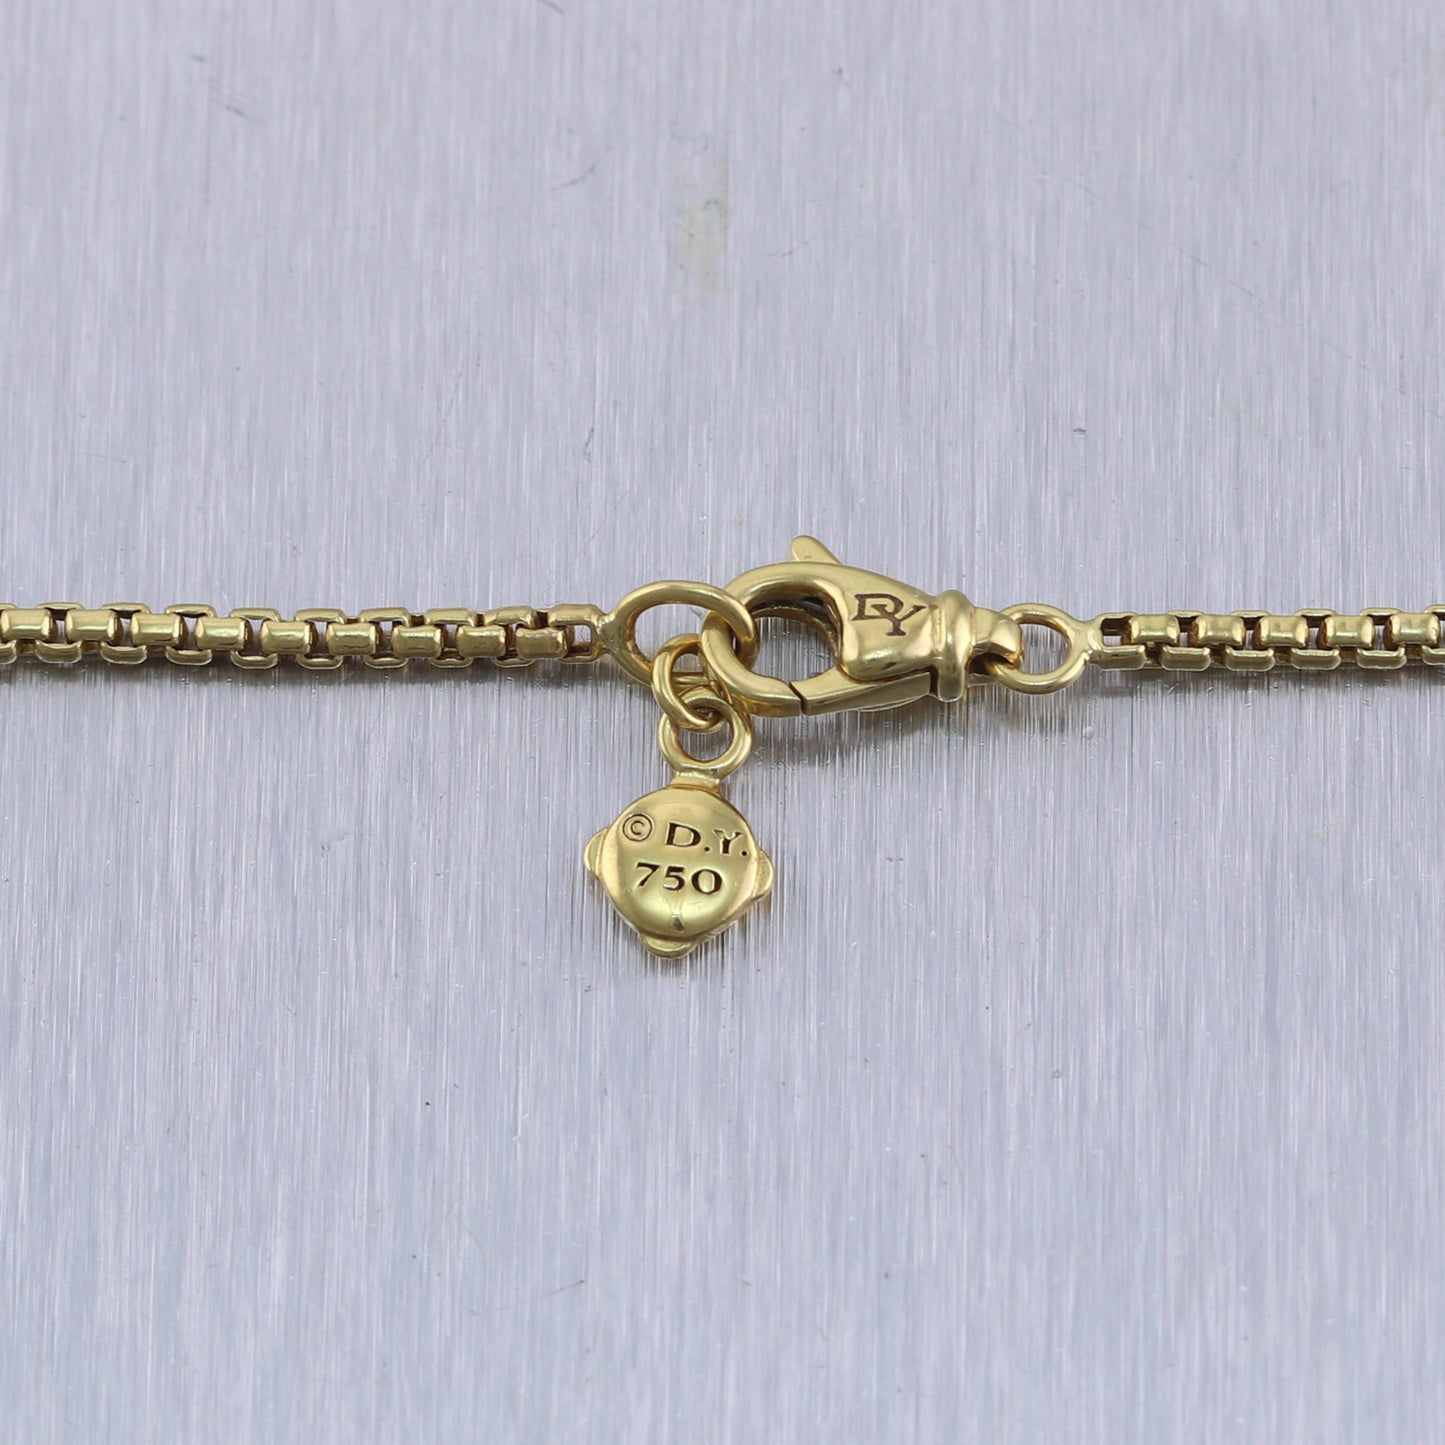 David Yurman 18k Yellow Gold Citrine & Diamond Cable Wrap Pendant 18" Necklace